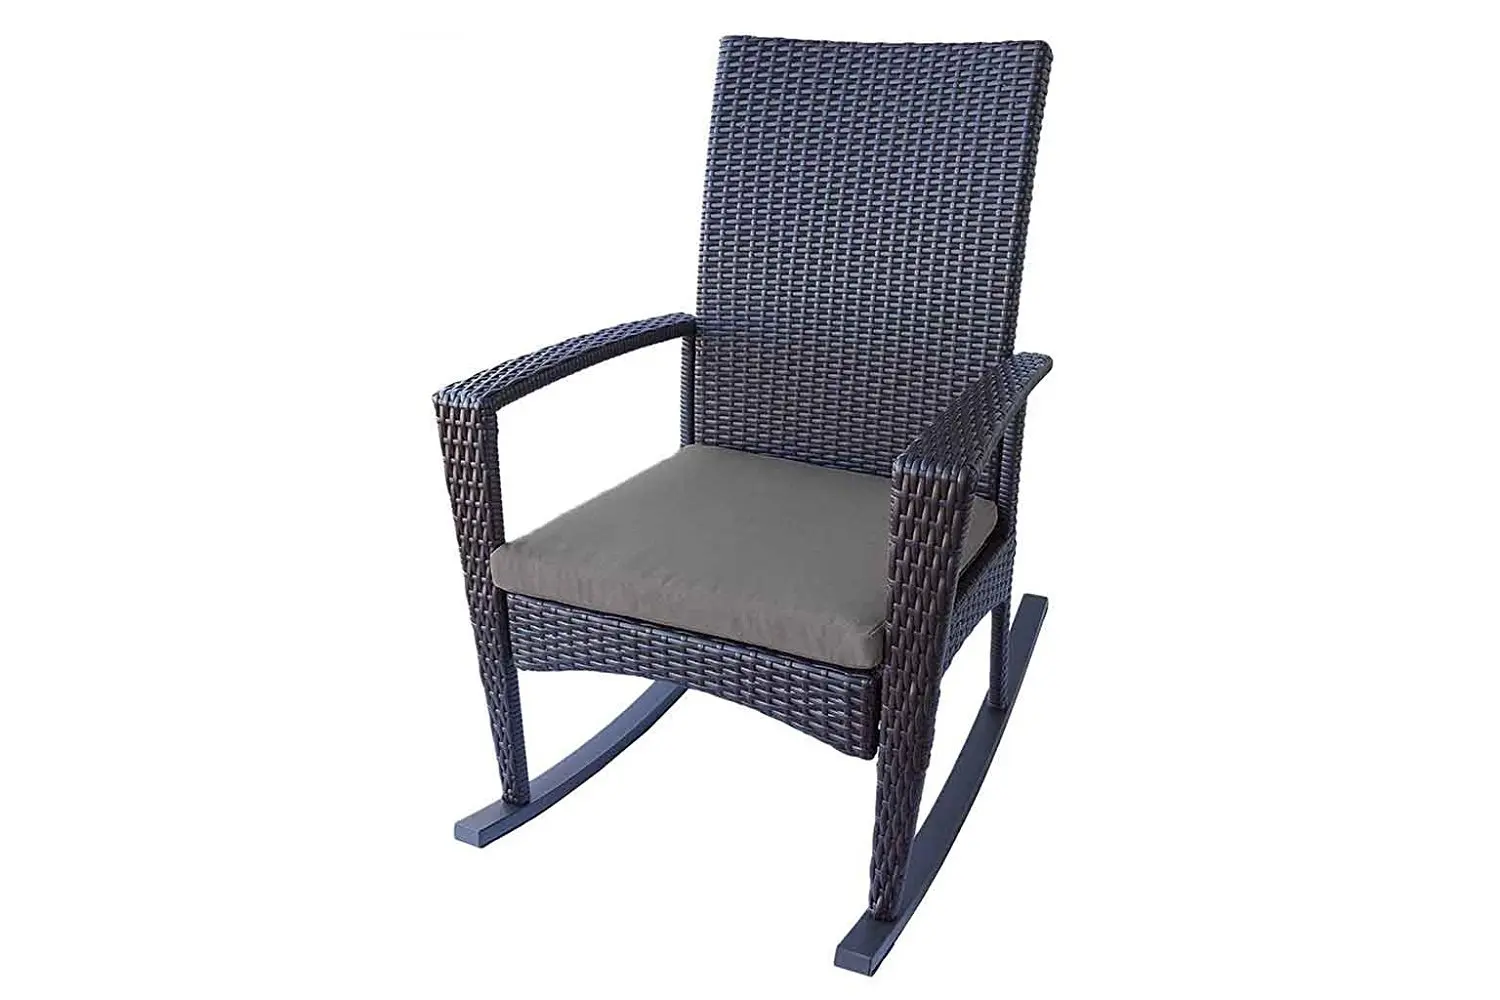 Cheap Wicker Rocking Chair Sale, find Wicker Rocking Chair Sale deals